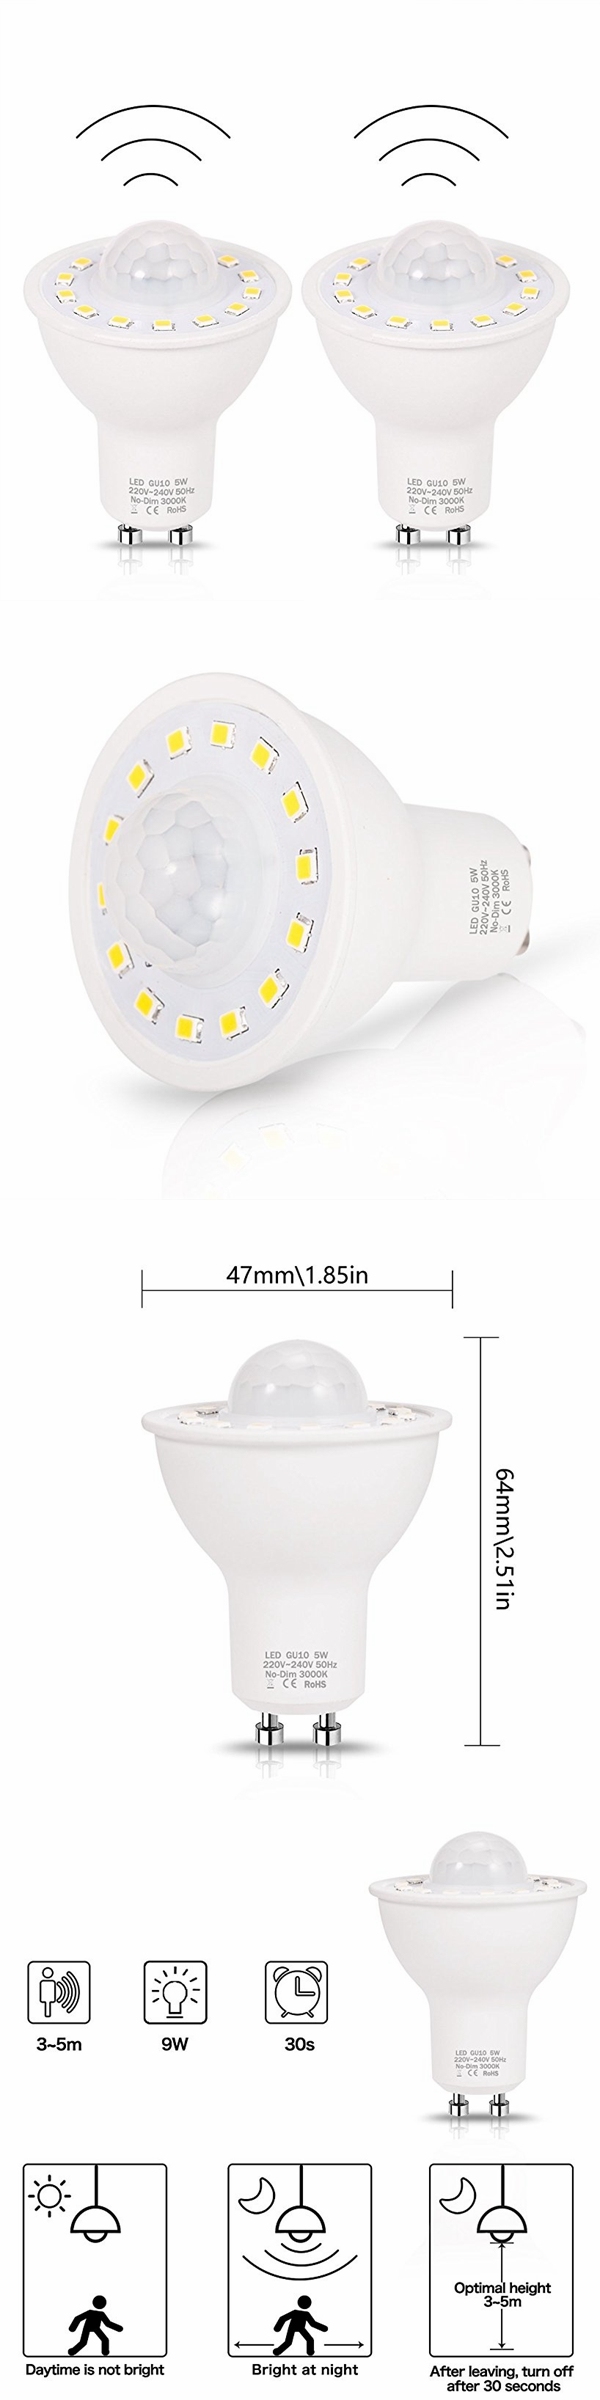 Lohas GU10 PIR Motion Sensor LED Light Bulbs 5W 50W Equivalent Warm White 3000K LED Senesor Spotlight